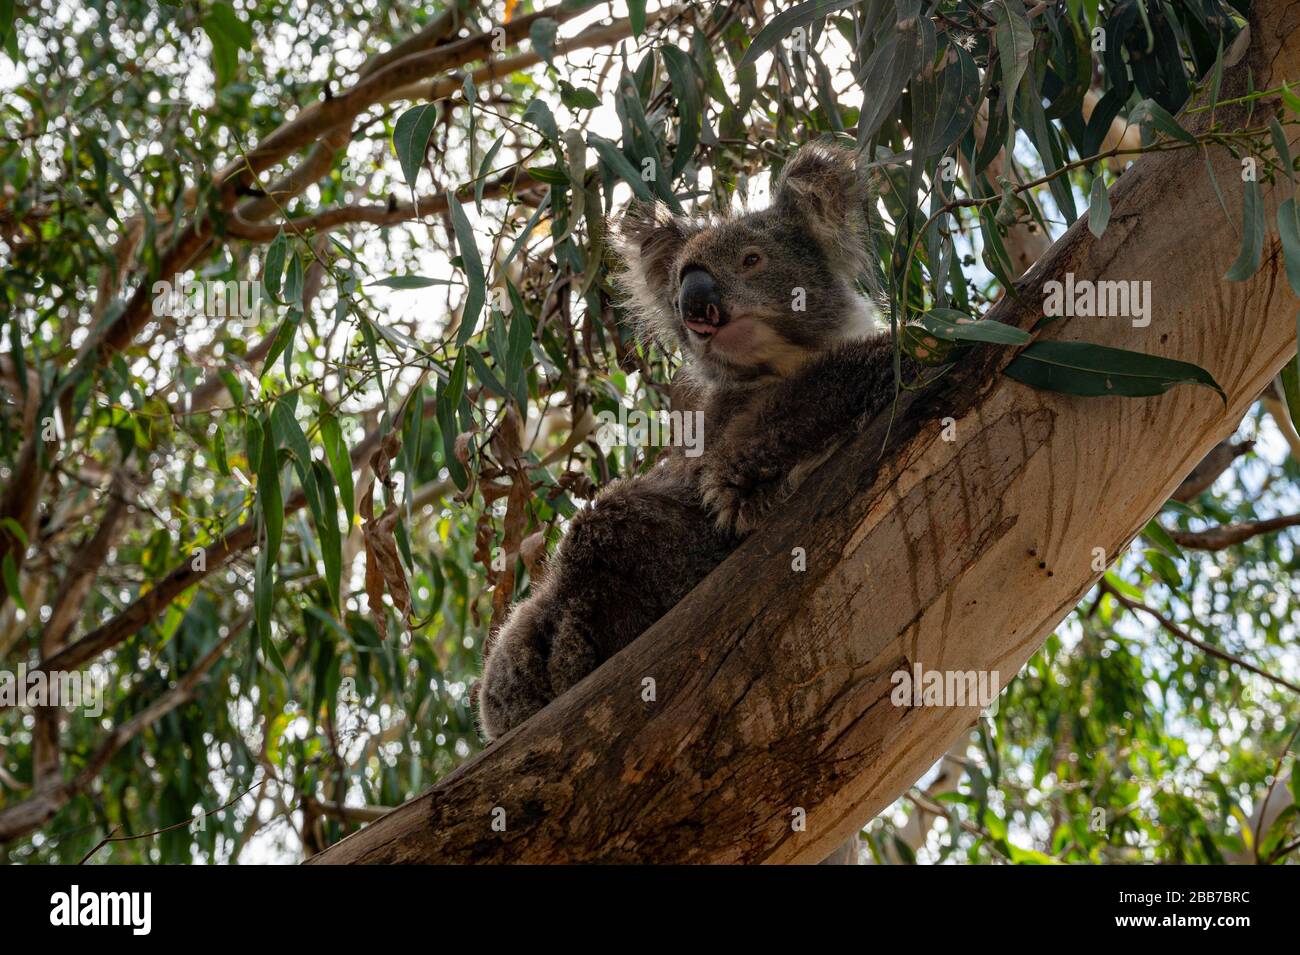 Koala, Phascolarctos cinereus, awake on a tree branch of Eucalyptus tree, Kennett River, Victoria, Australia Stock Photo